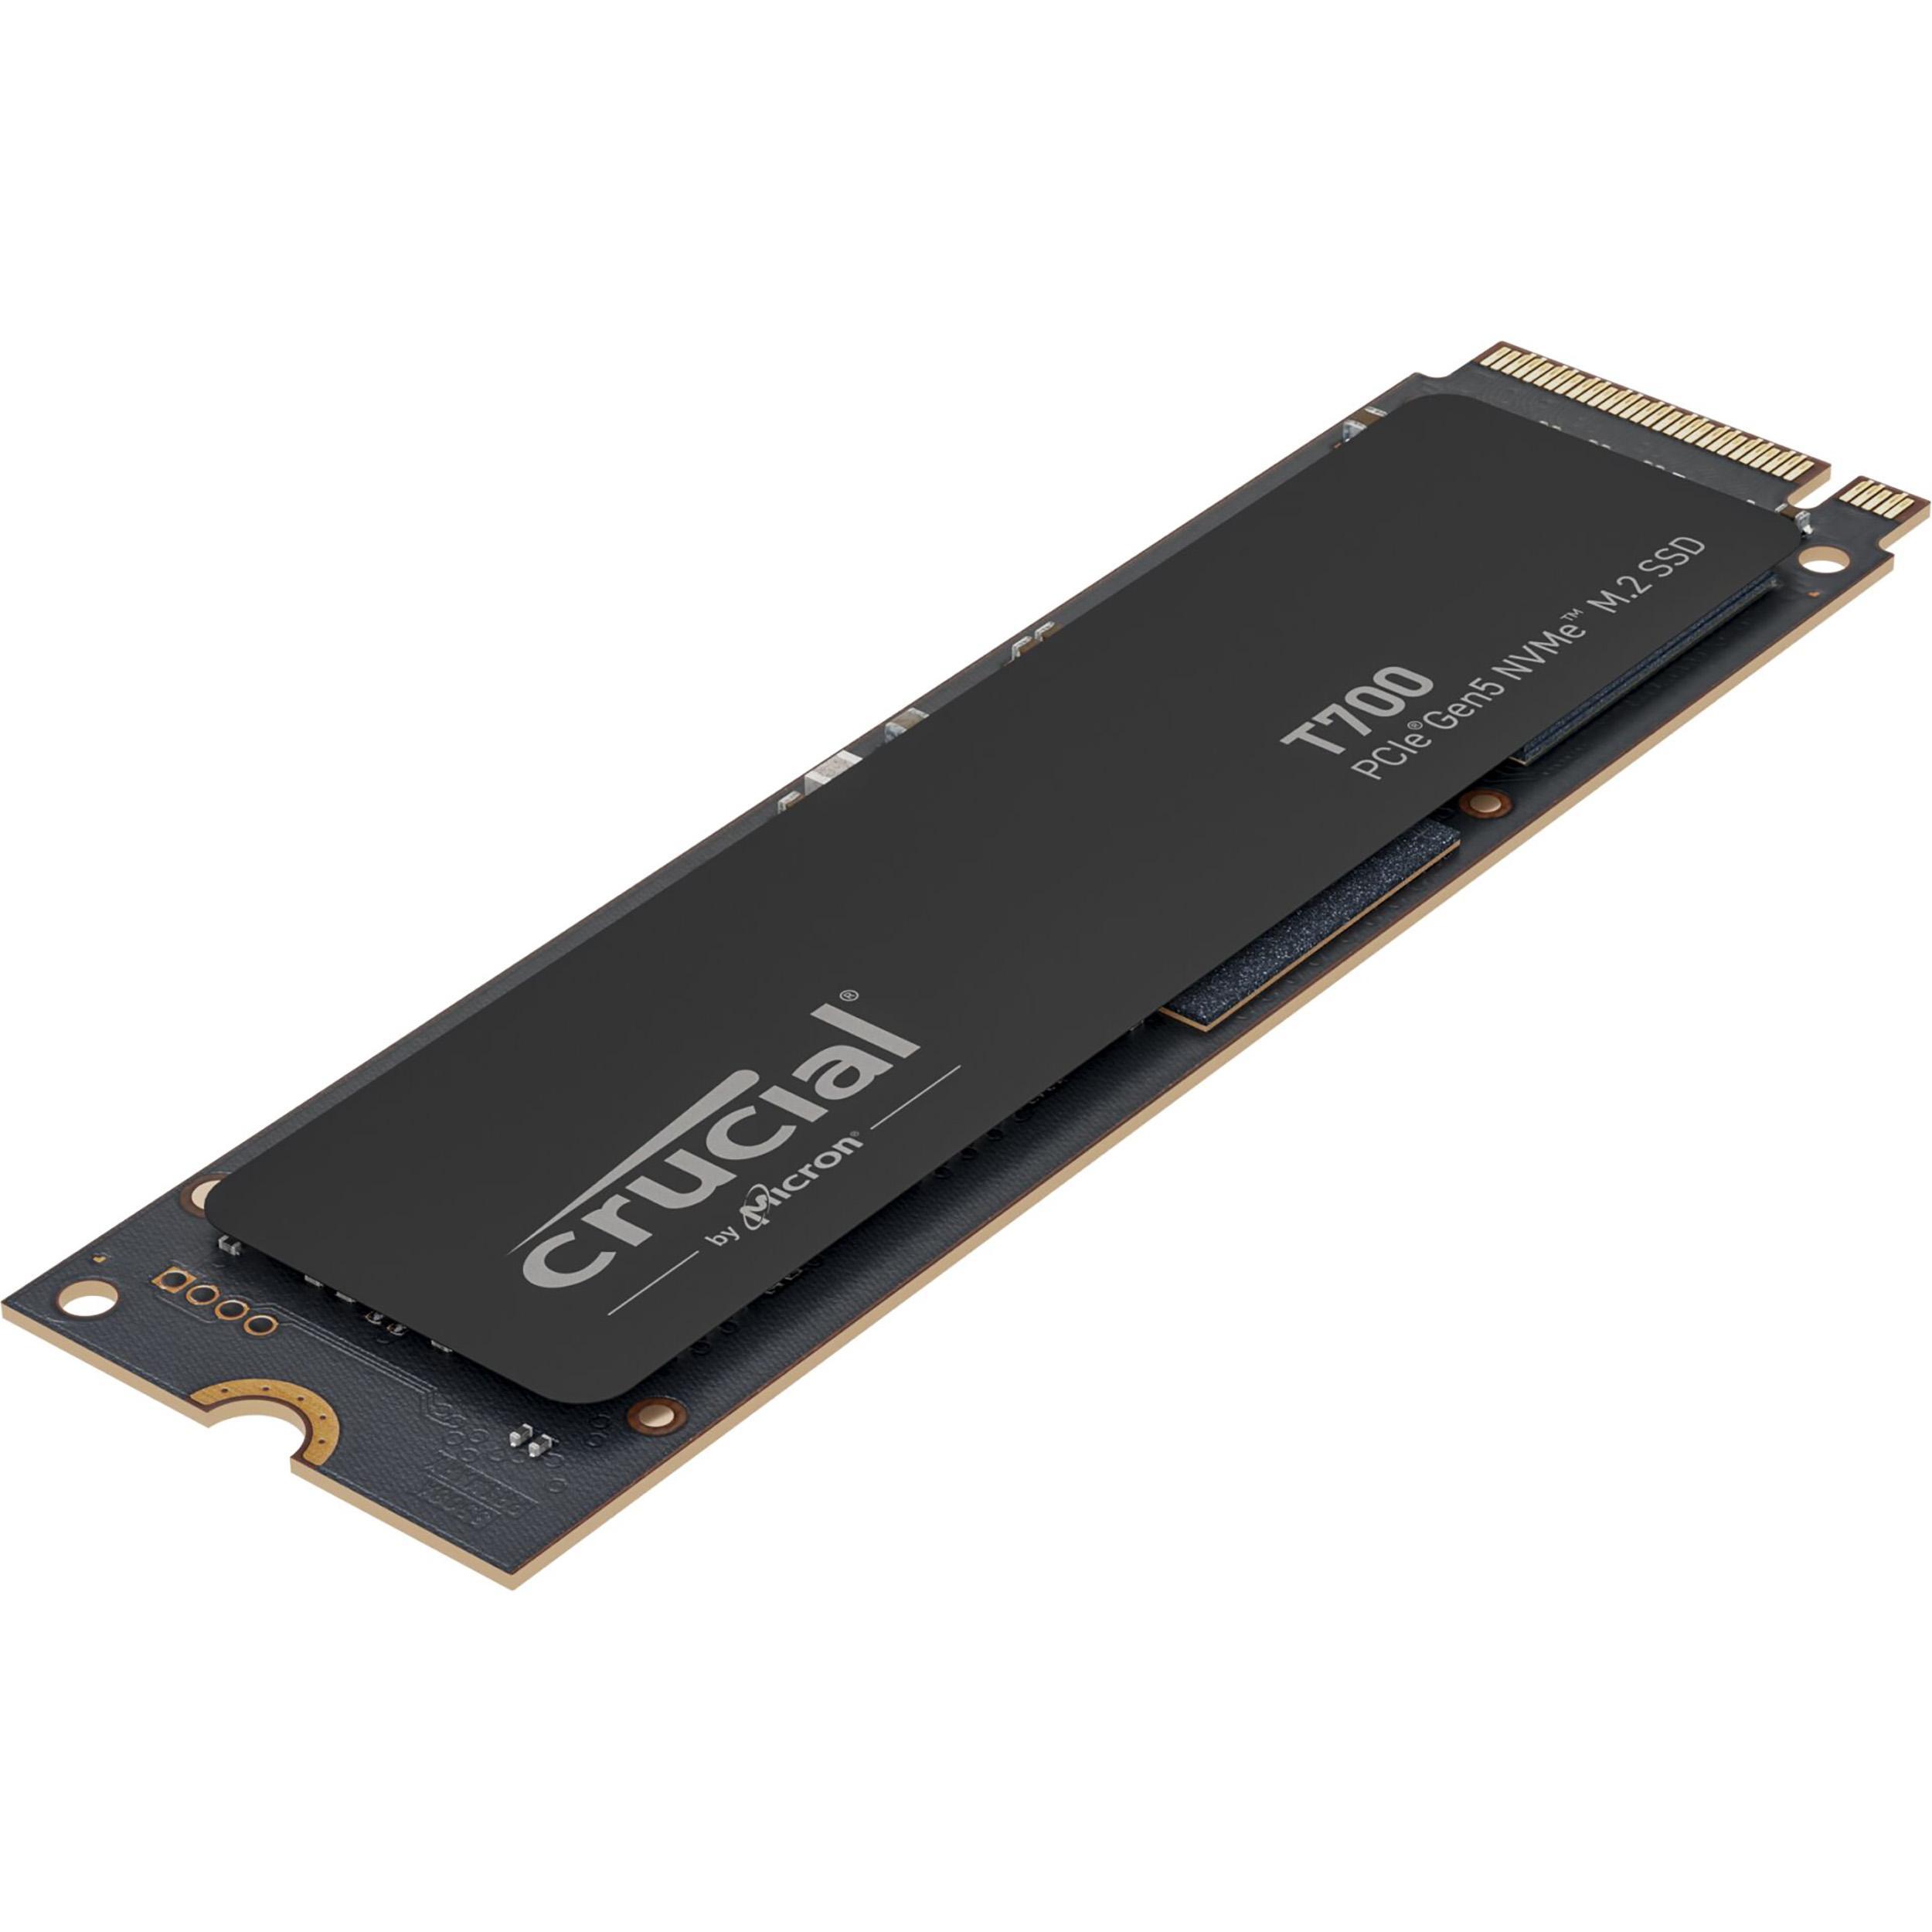 CRUCIAL T700 SSD via M.2 NVMe, 2 TB NVMe SSD, Gen5 PCIe intern